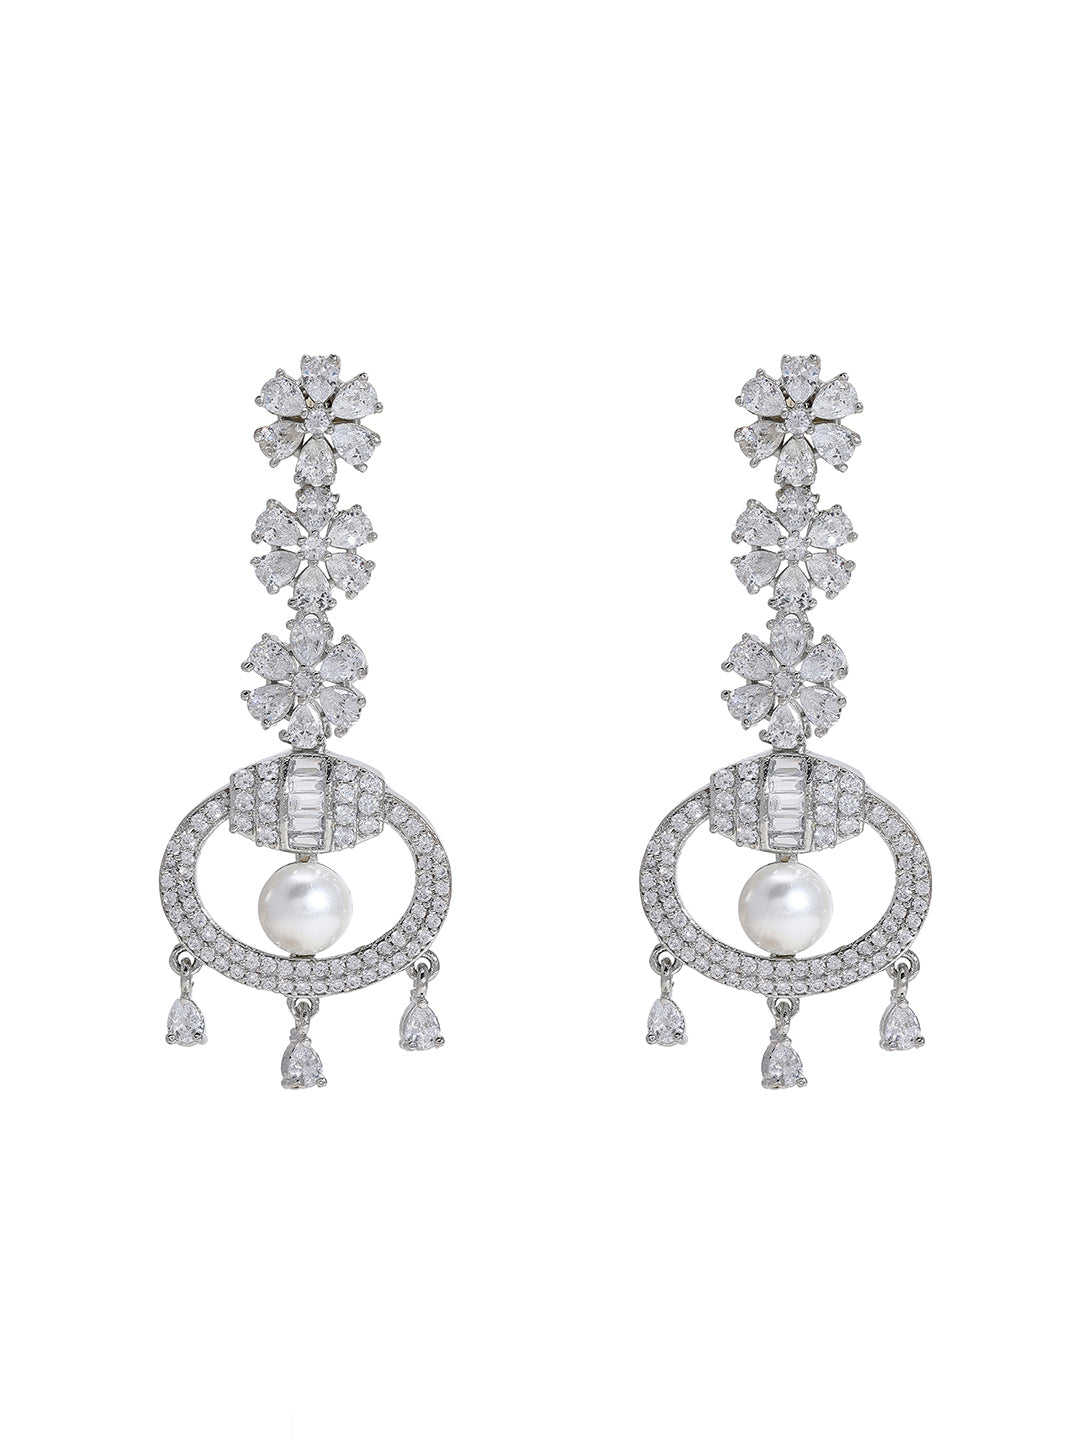 Priyaasi American Diamond and Pearl Adorned Silver-Plated Earrings